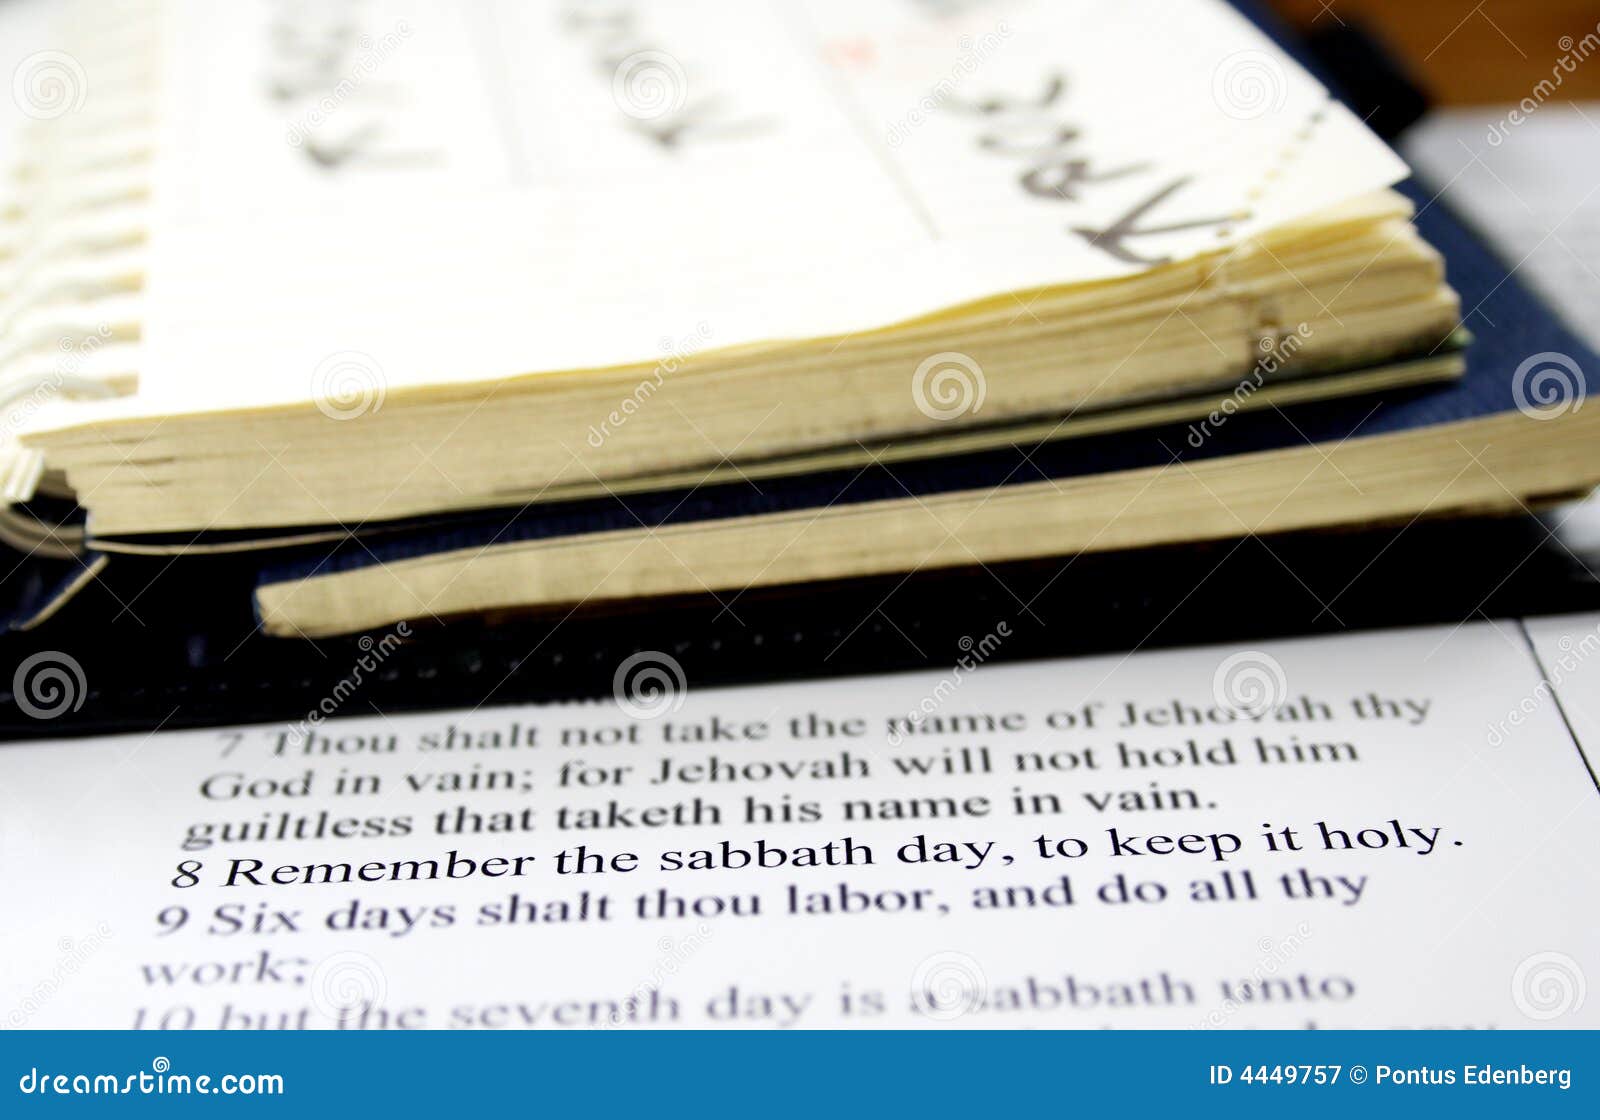 remember the sabbath day